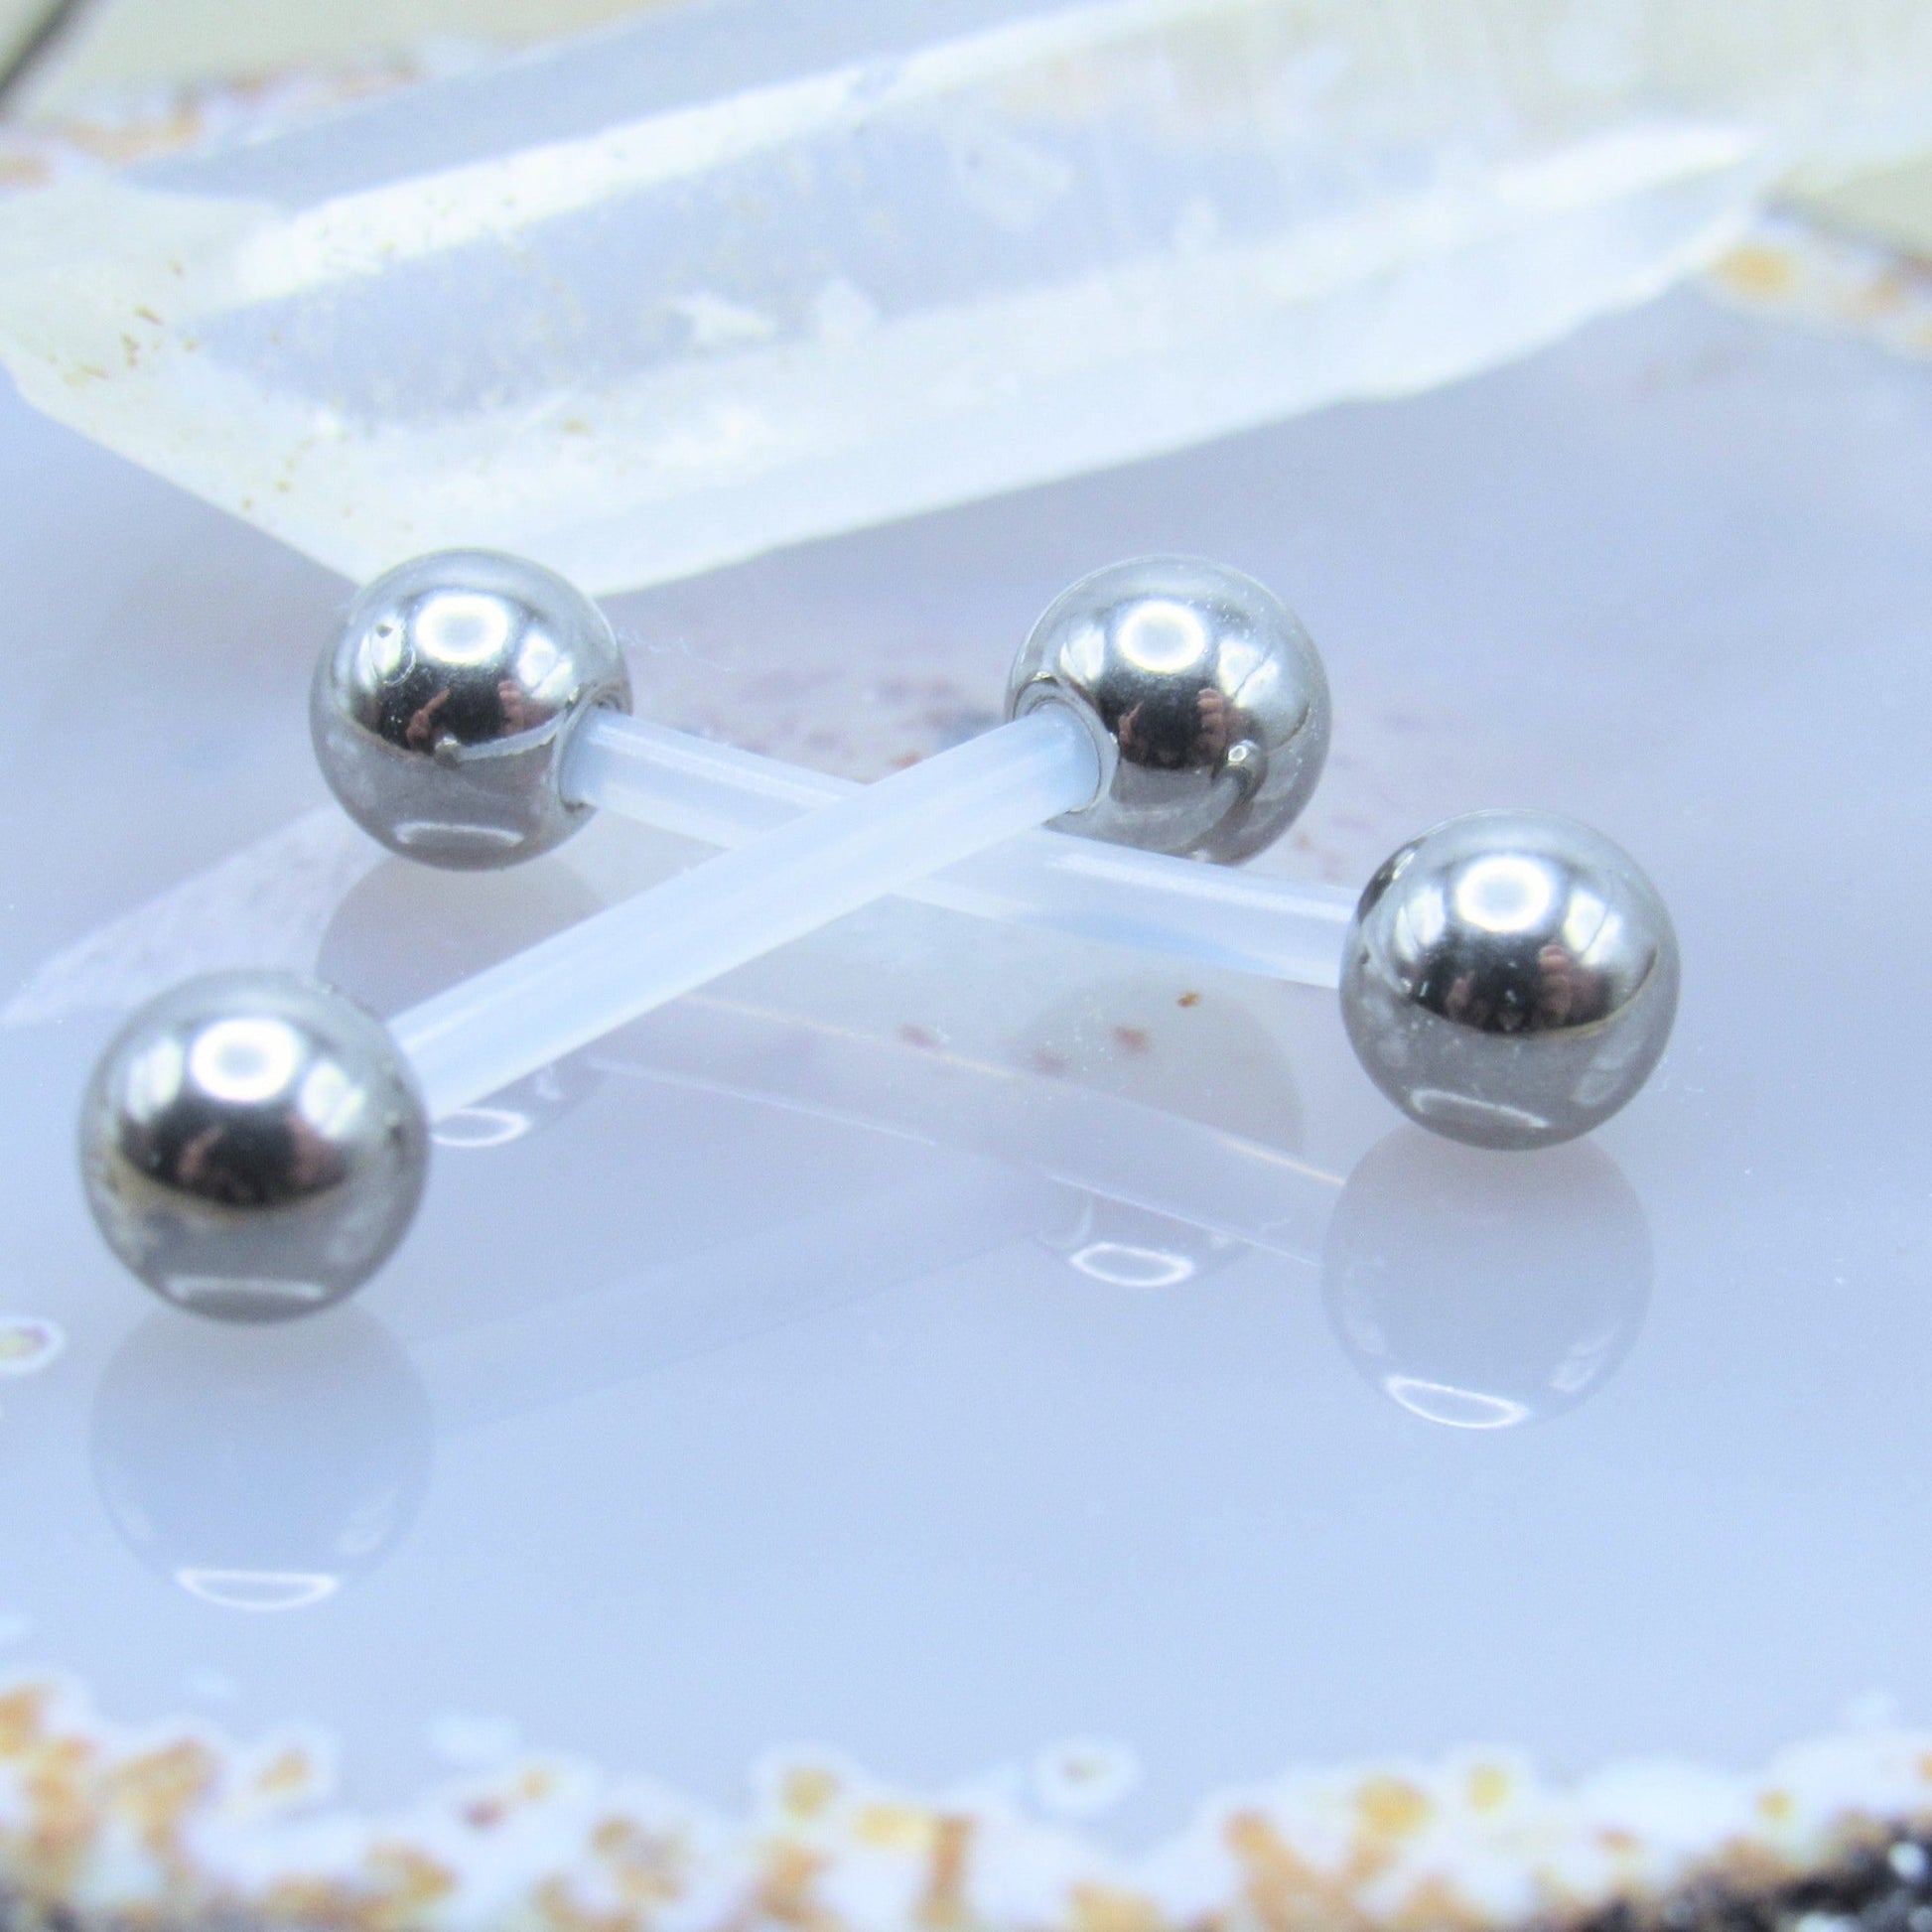 Flexible shaft nipple piercing barbell set 14g 5mm externally threaded ball ends - Siren Body Jewelry